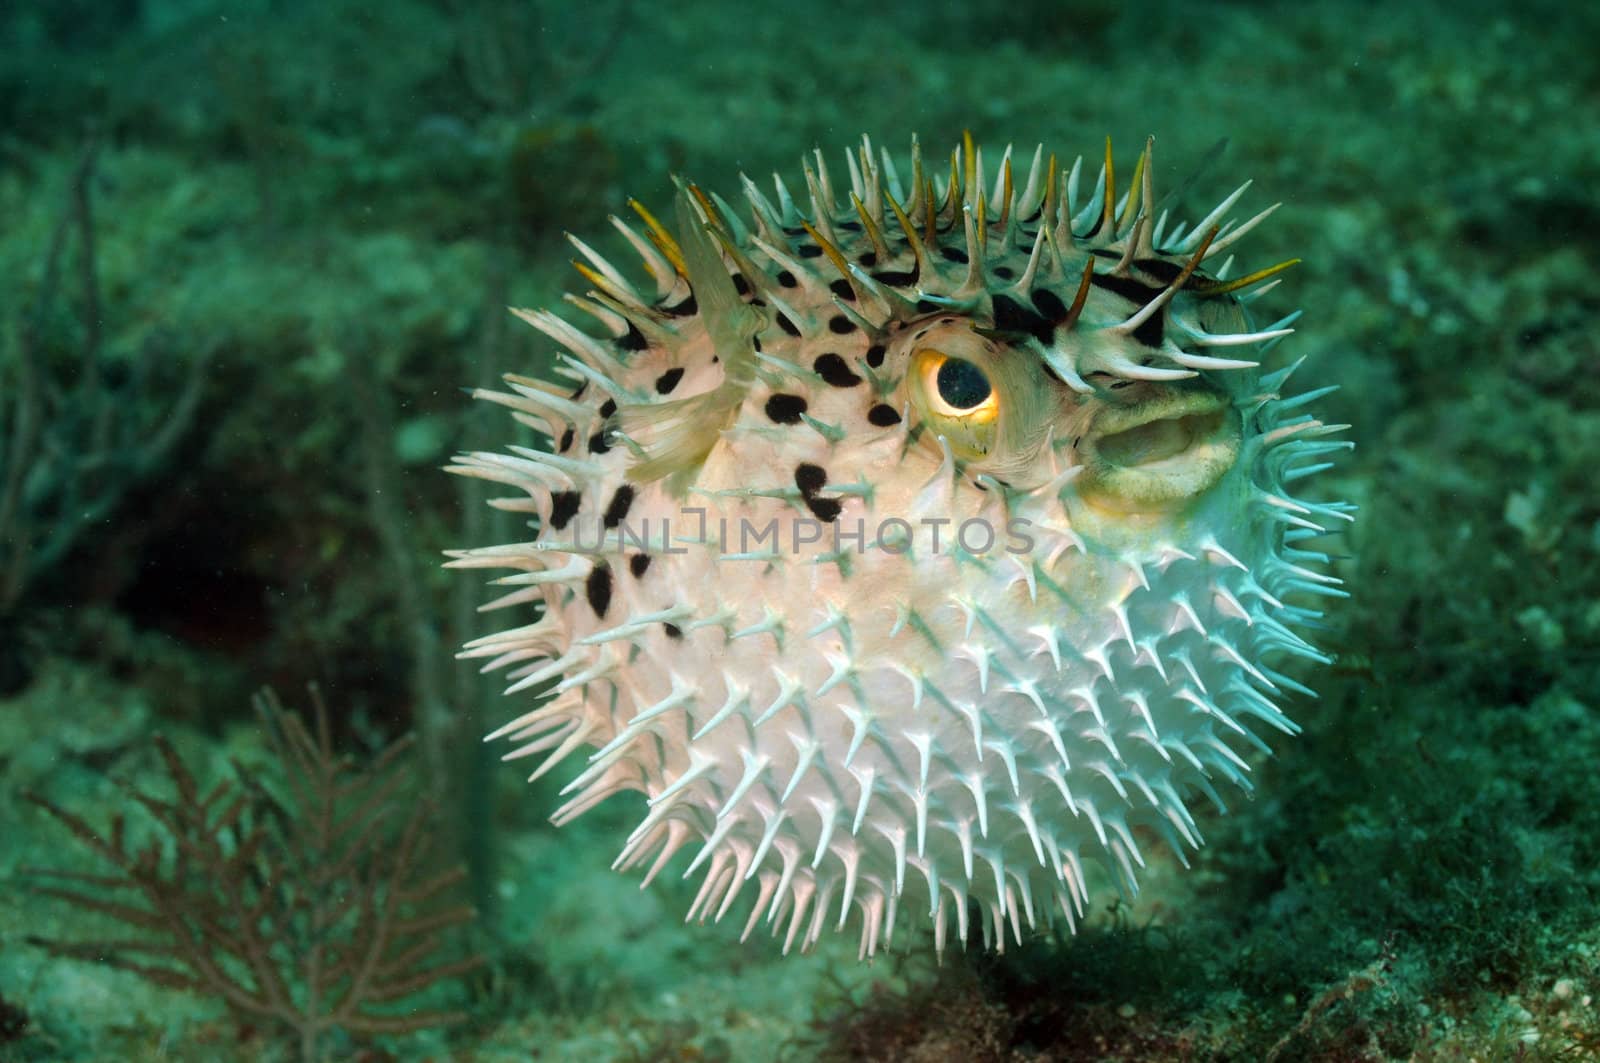 Blowfish or puffer fish underwater in ocean